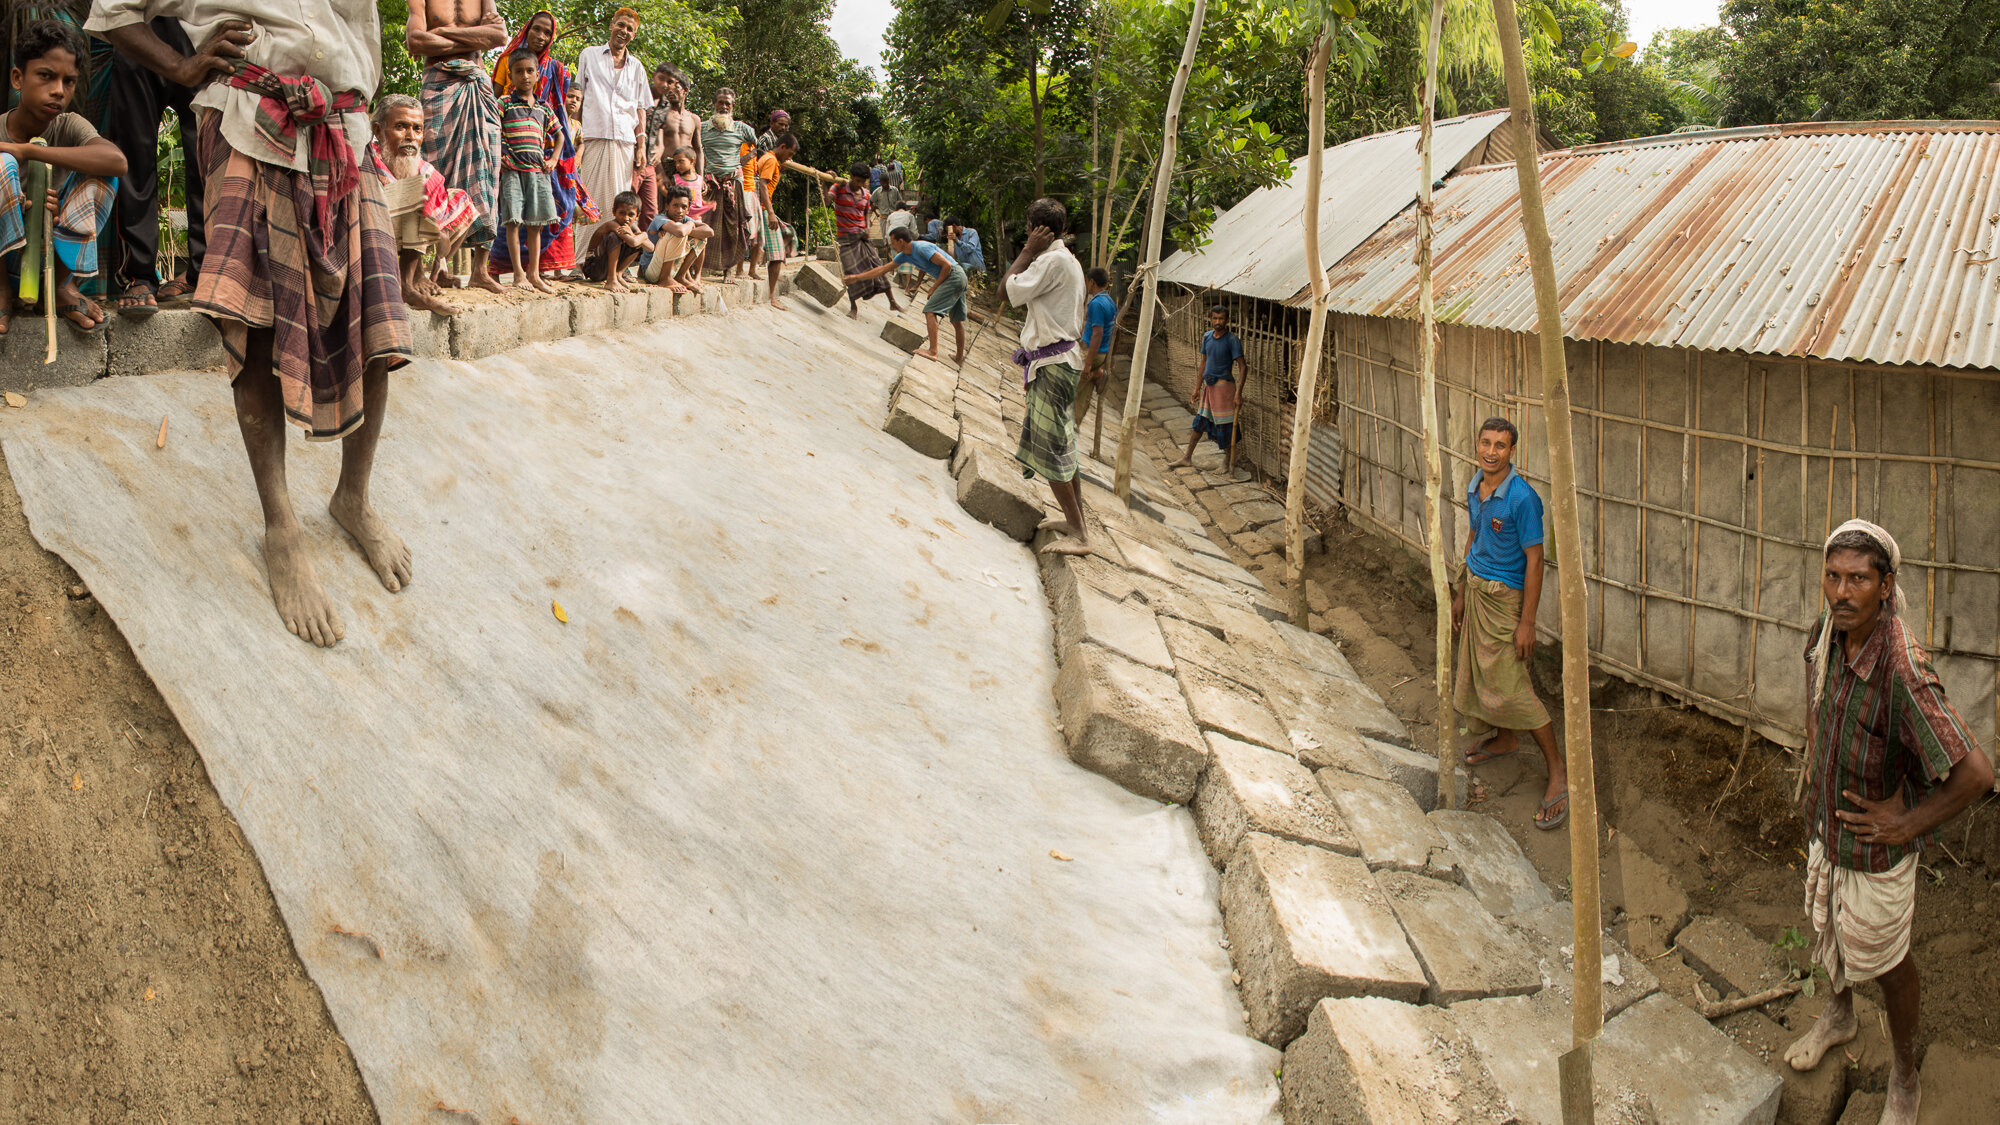  Embankment Construction In Village Along the Brahmaputra River 